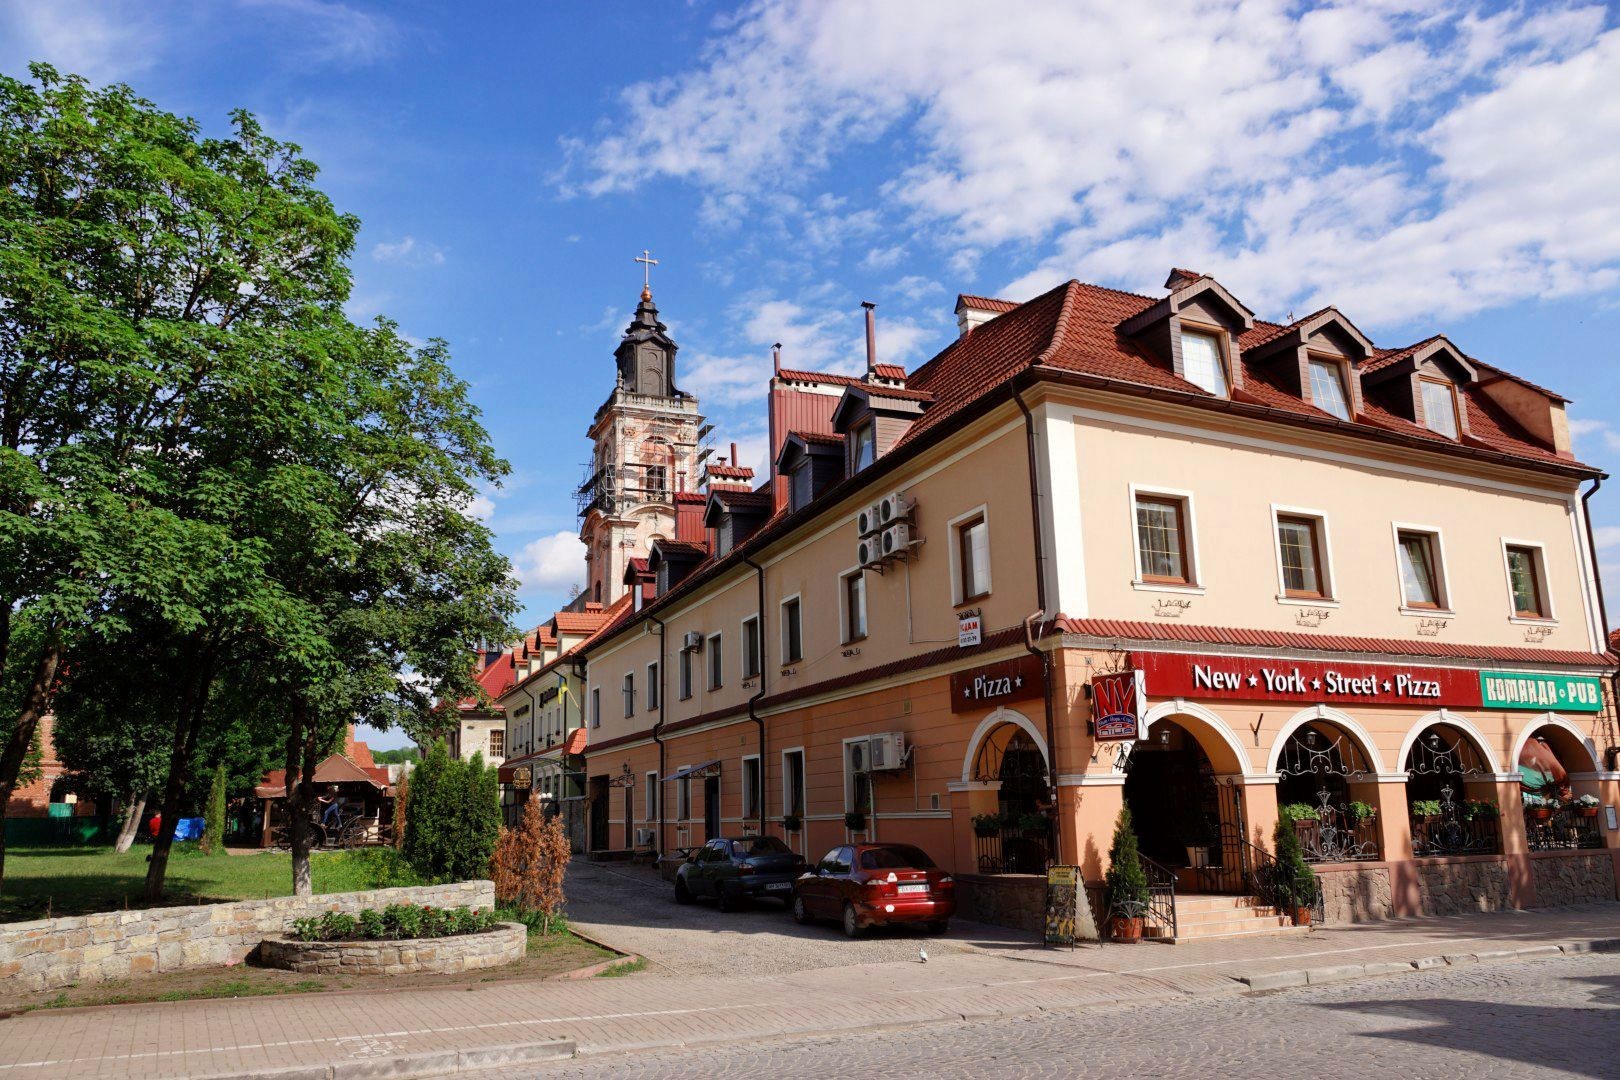 stare miasto w Kamieńcu Podolskim